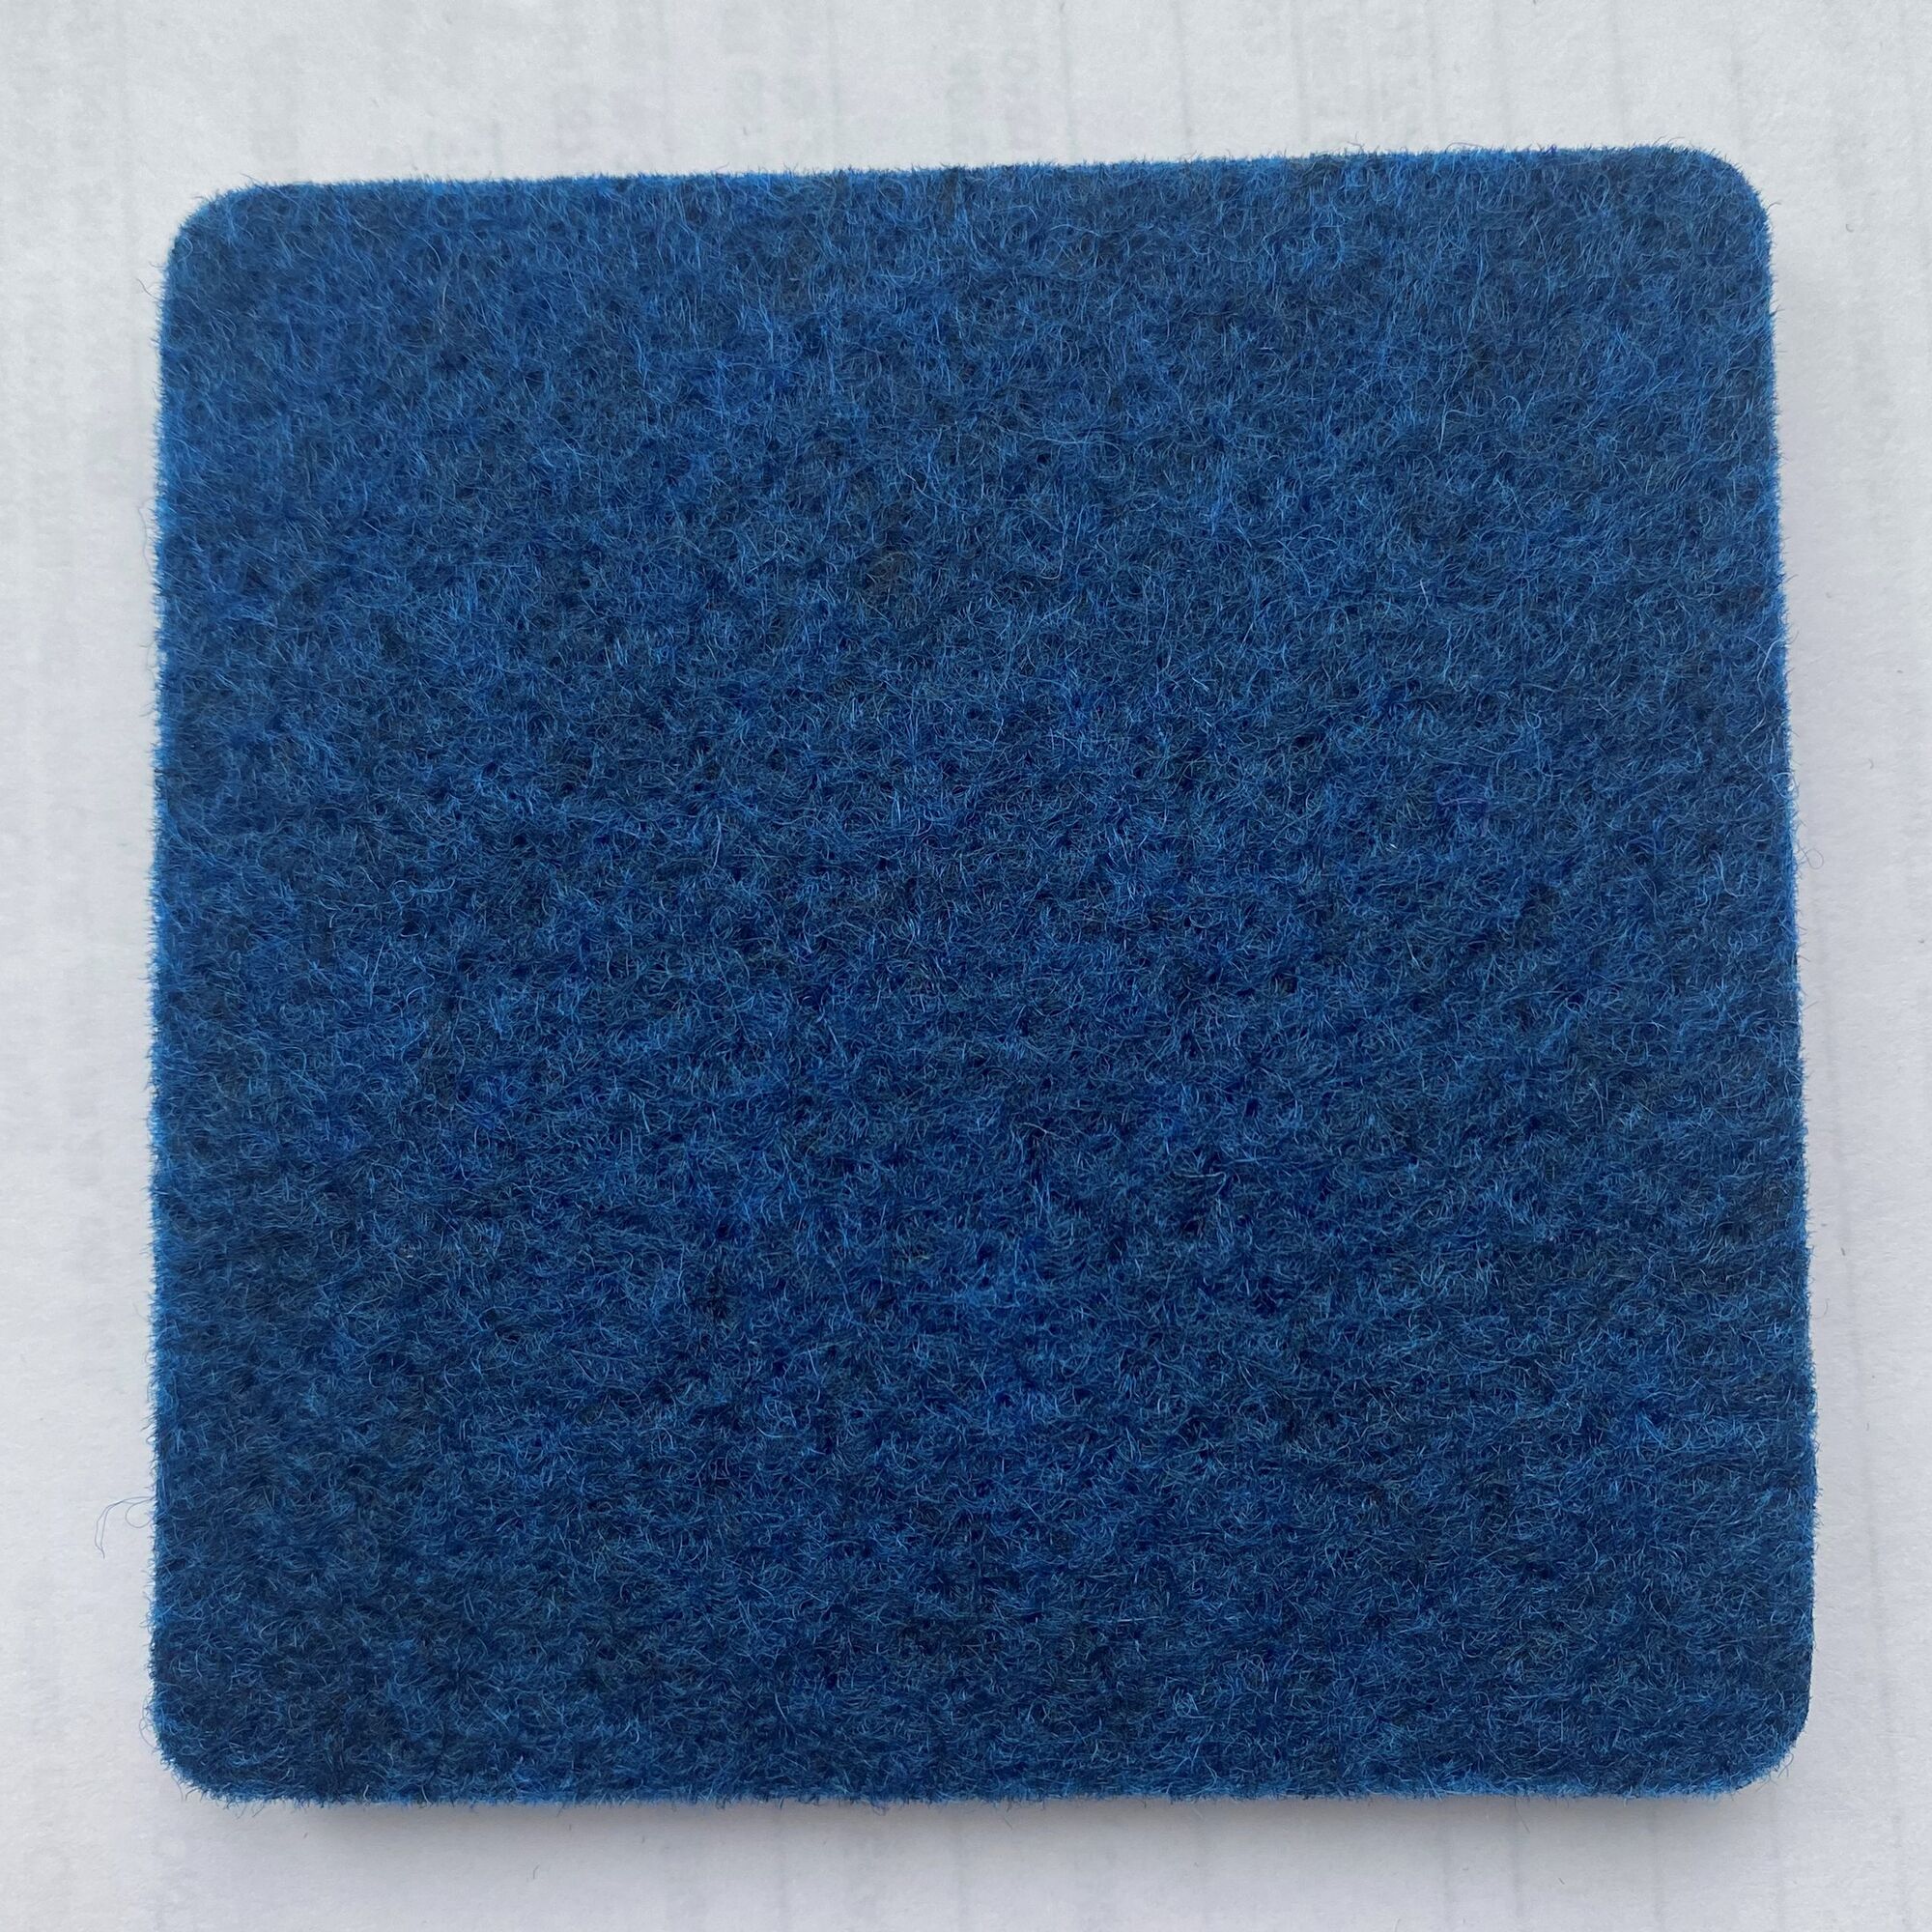 Войлок искусственный 9 мм 1,2х2,4 м синий авантюрин